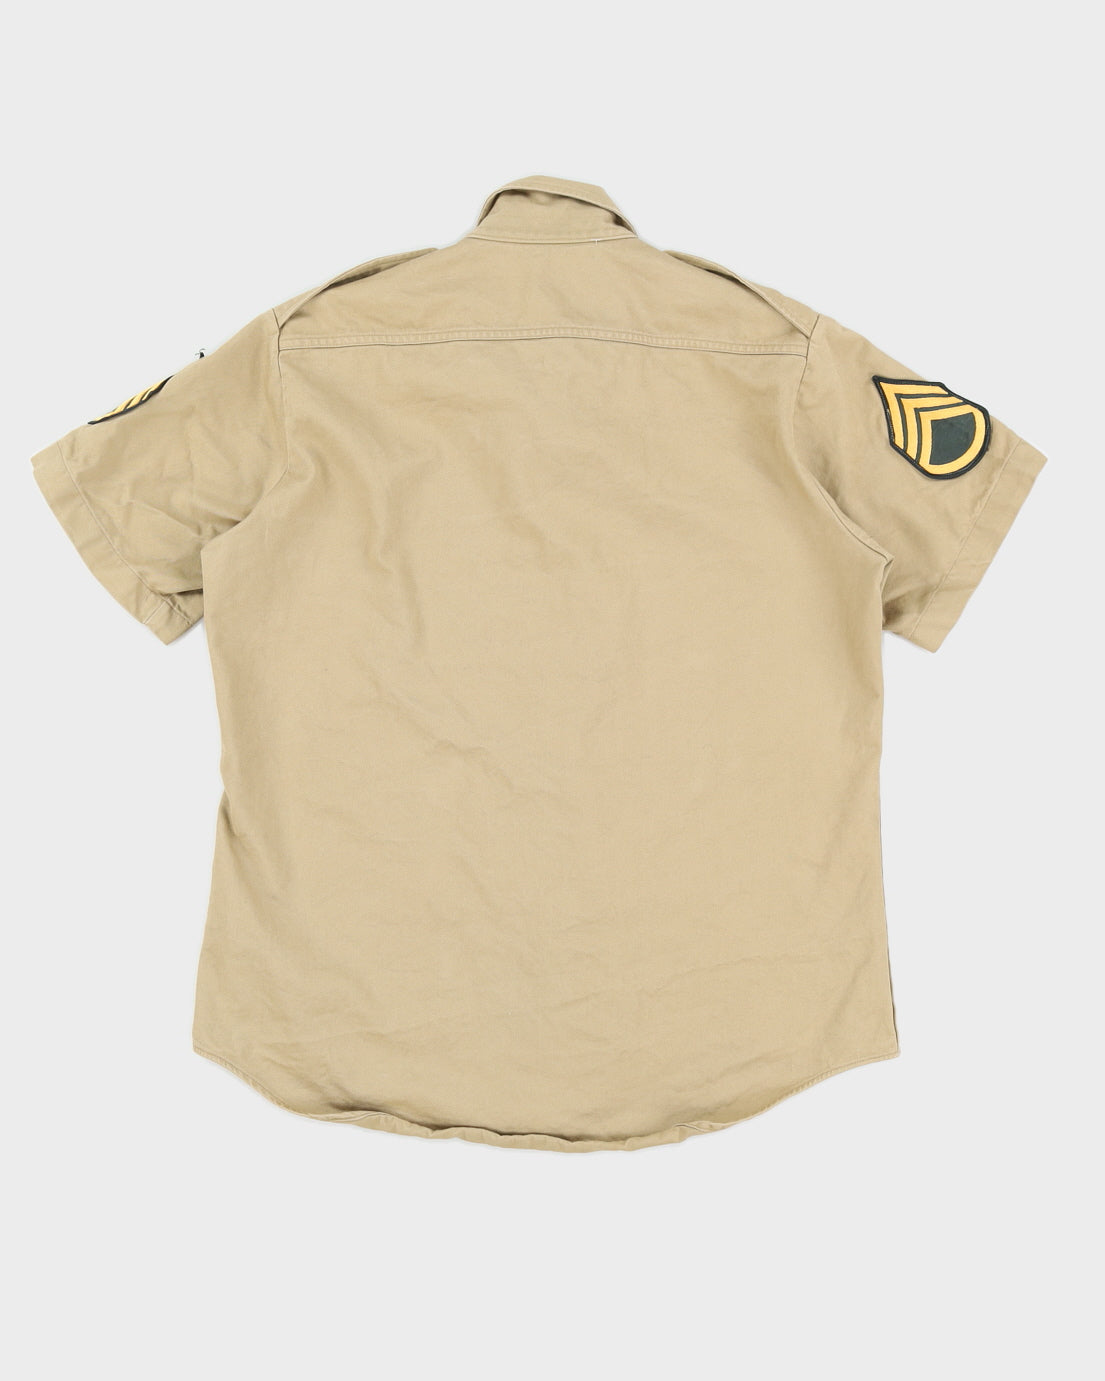 70s Vintage US Army Khaki Shirt - M